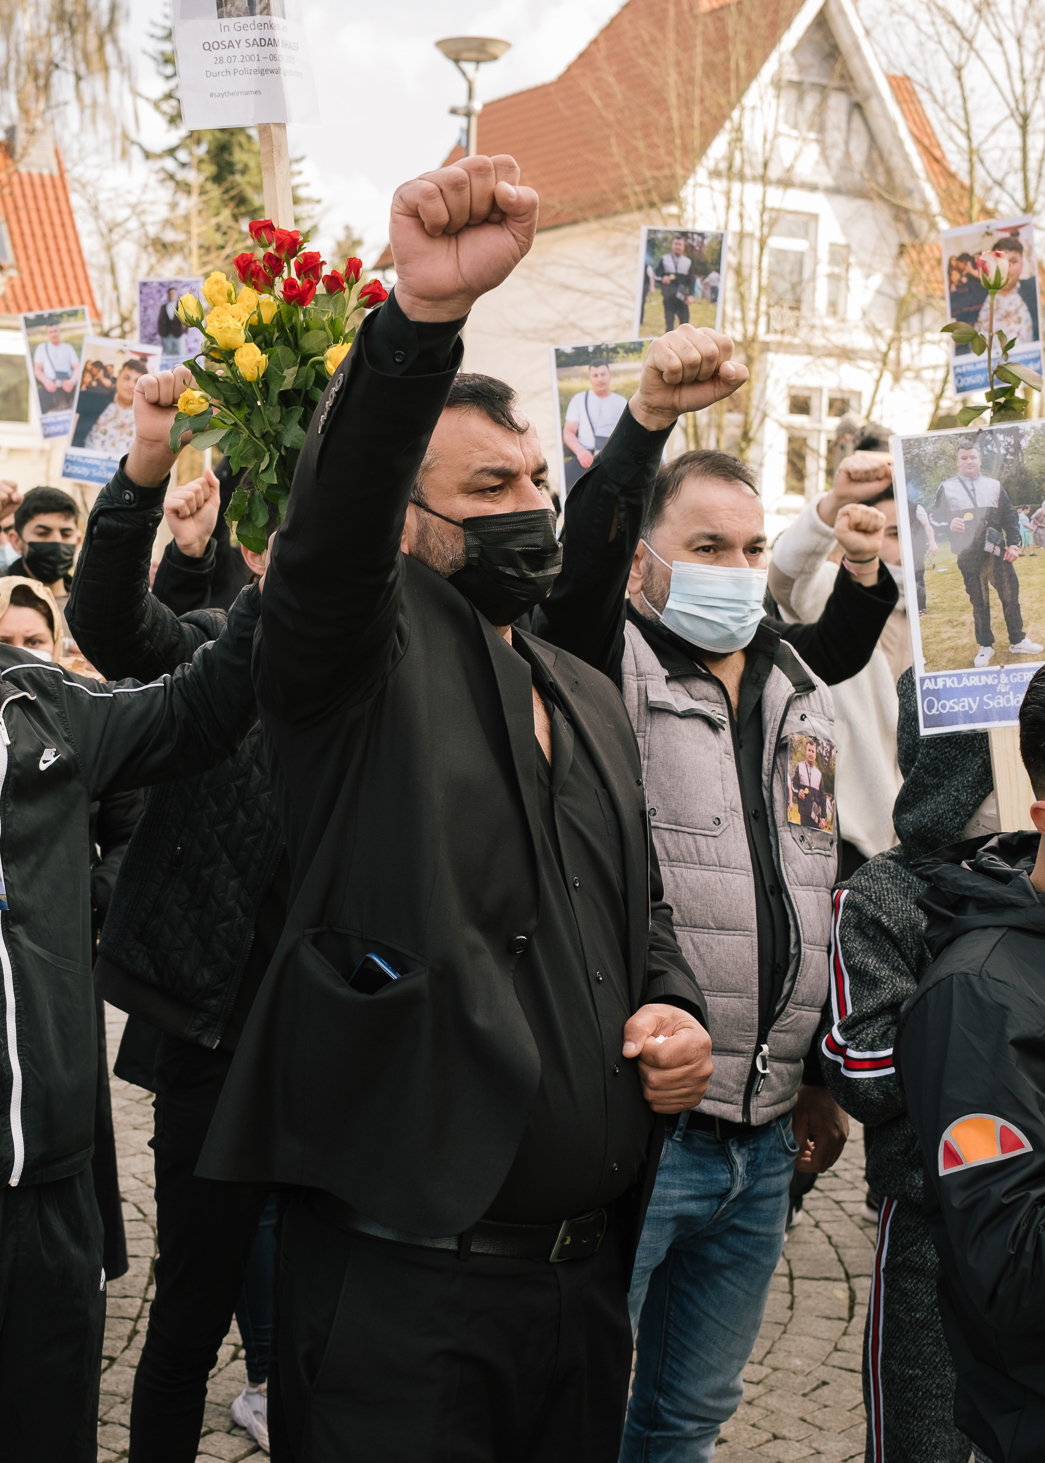 The father od Qosay Khalaf raising his fist during a rally in Delmehorst. April 3rd, 2021, Delmenhorst 